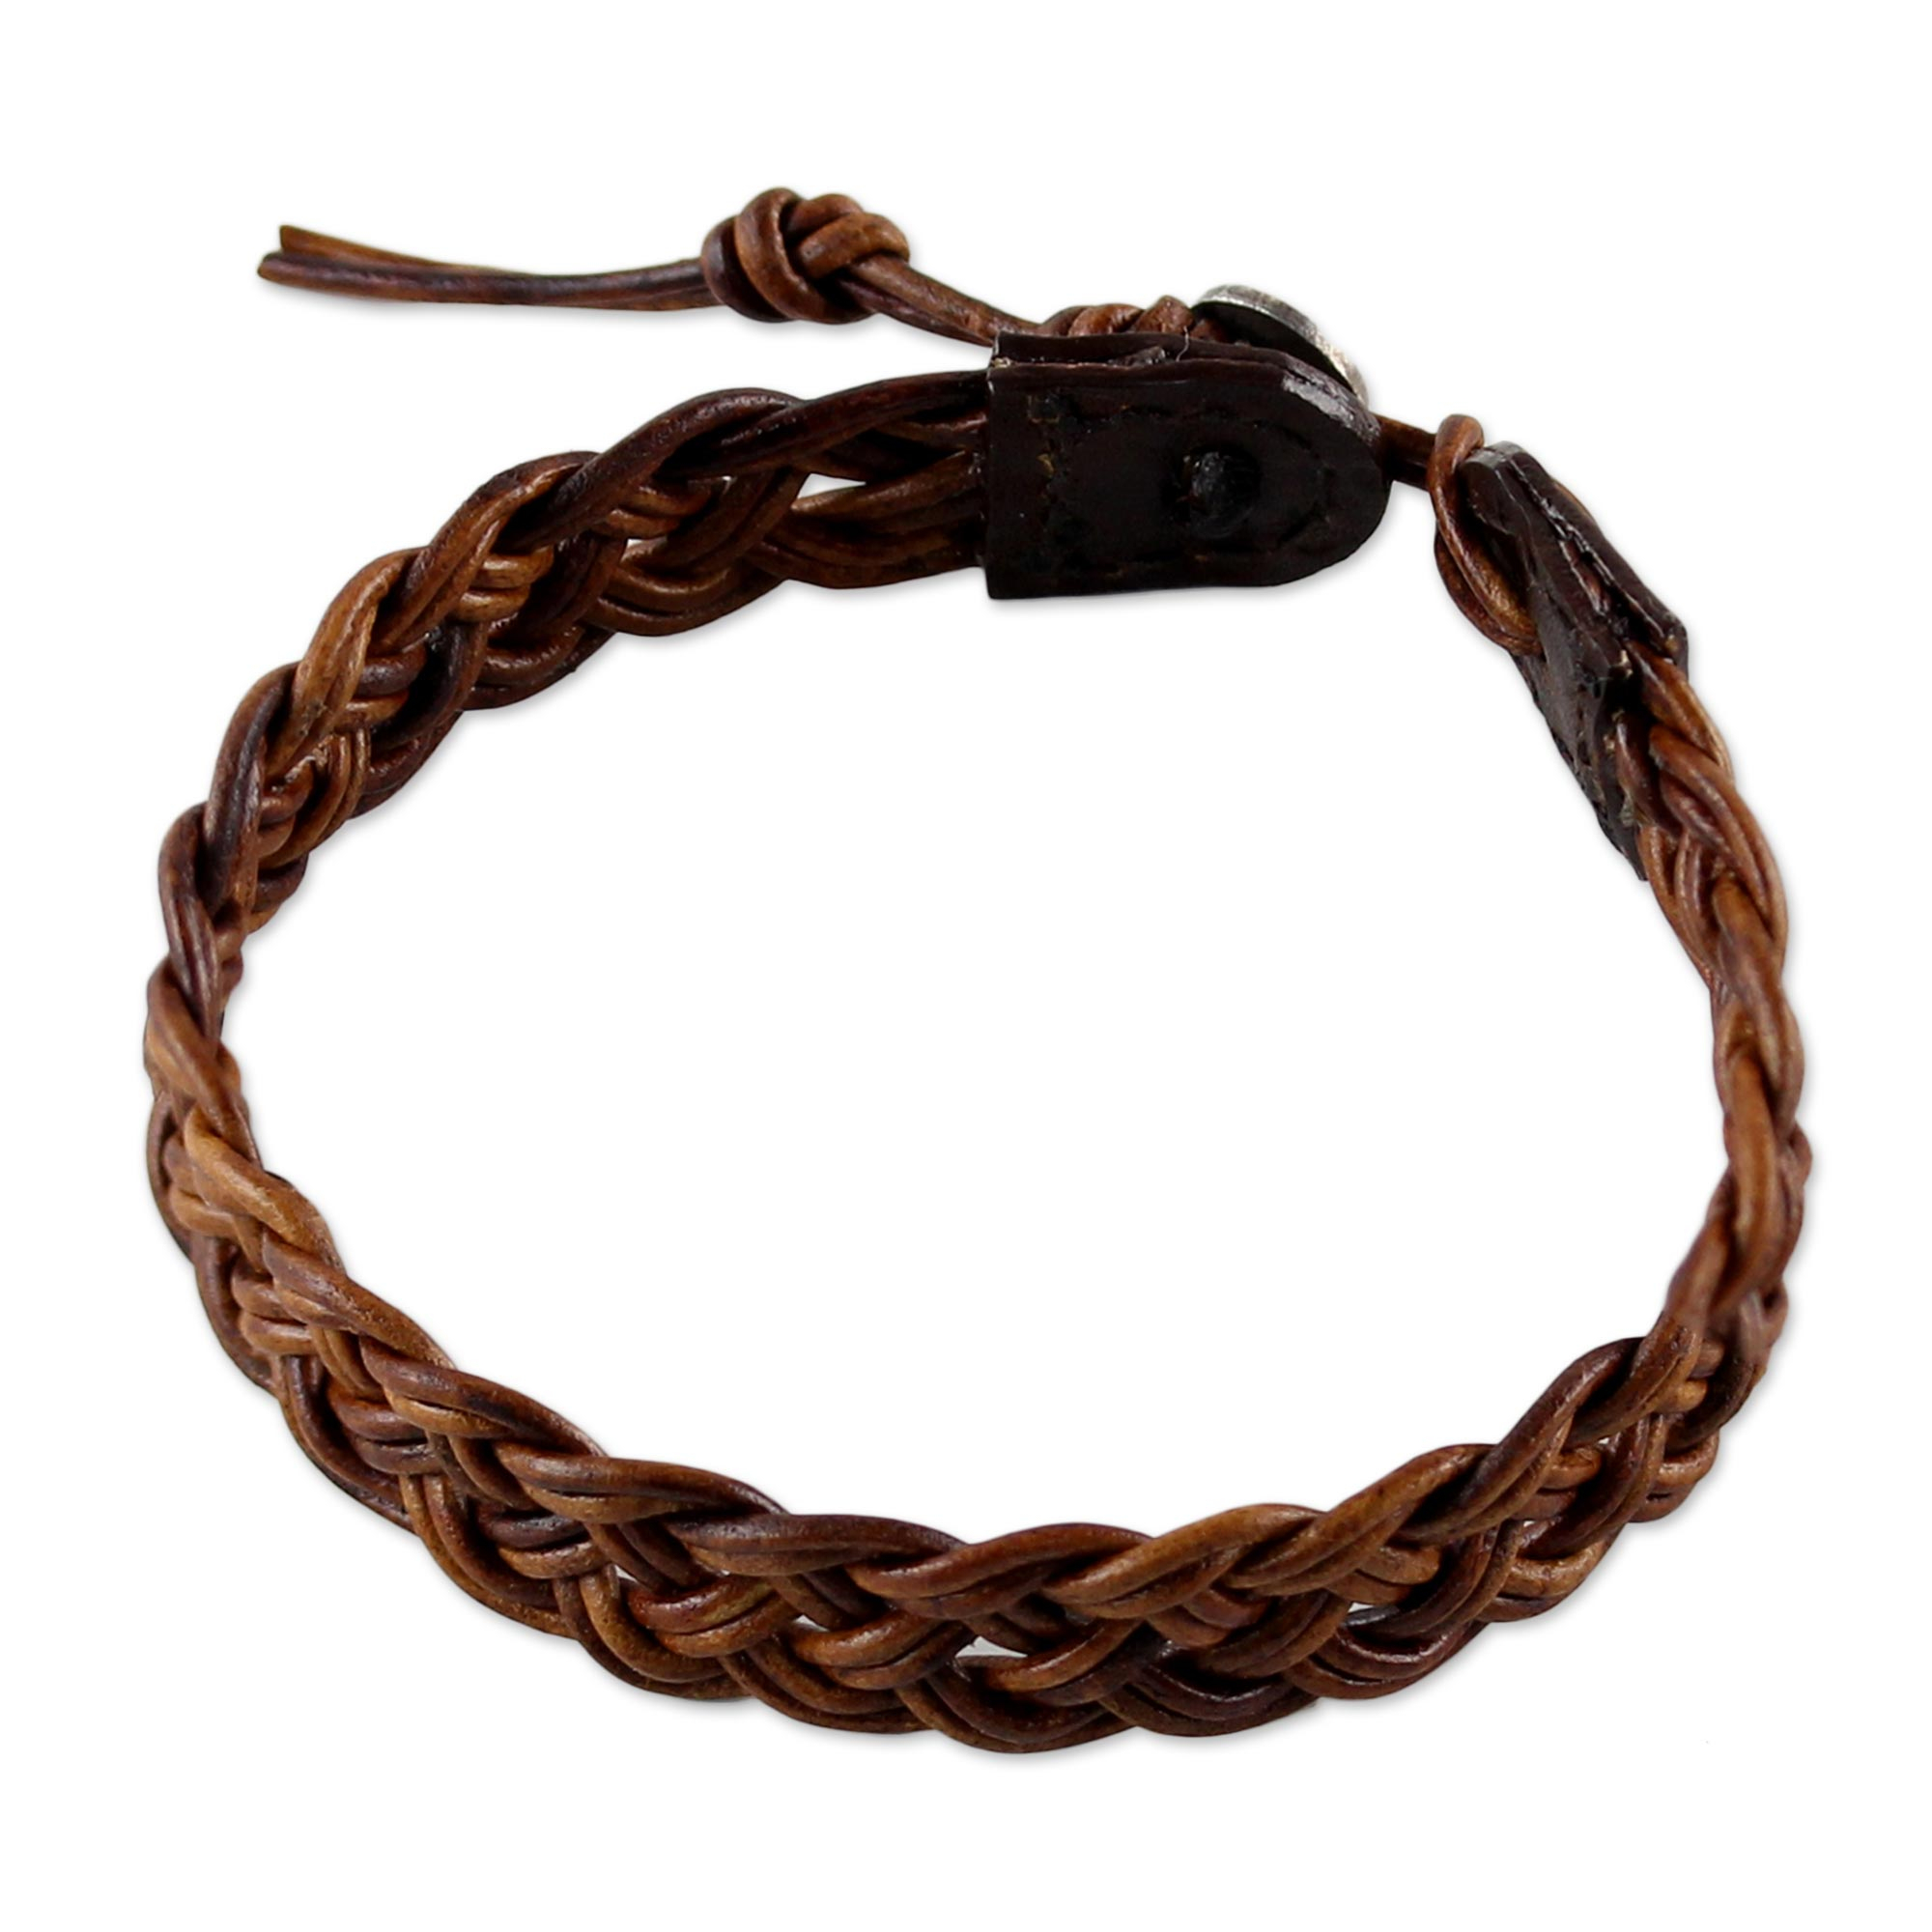 Cinnamon Brown Leather Braided Bracelet from Thailand, 'Cinnamon Braid